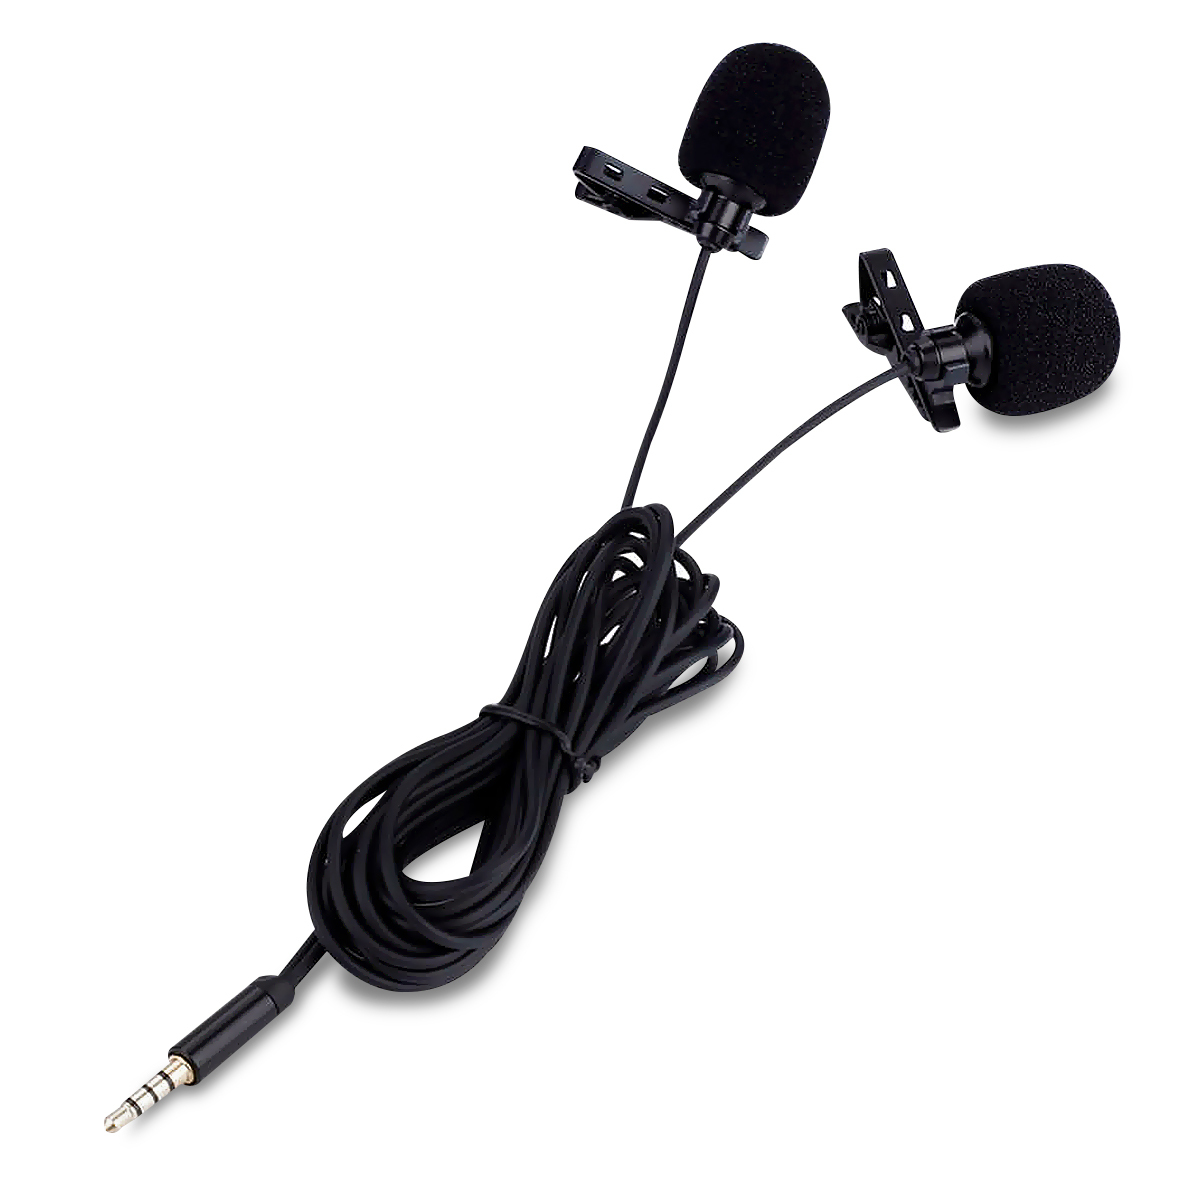 Micrófono Profesional DBugg MD67 / Negro / Auxiliar 3.5 mm